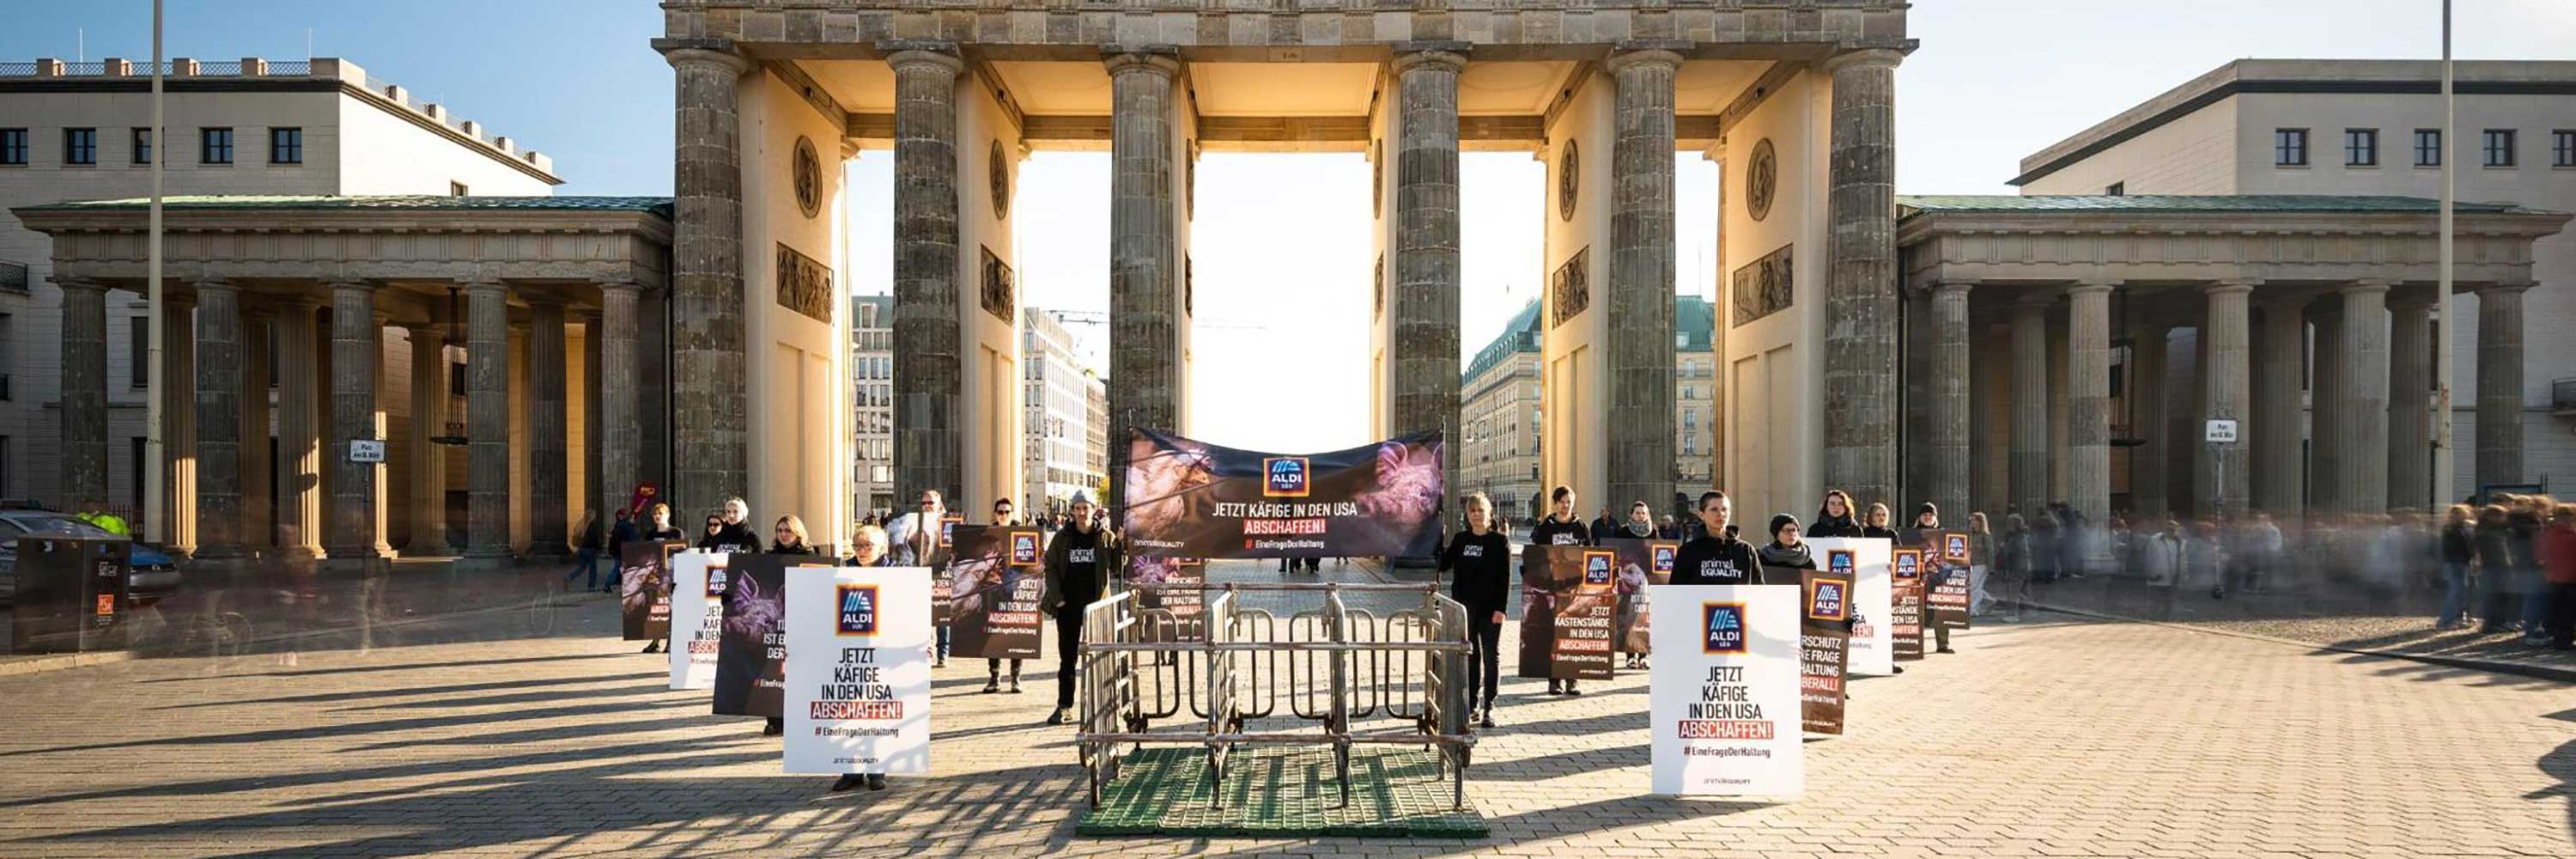 Aldi Germany Protest